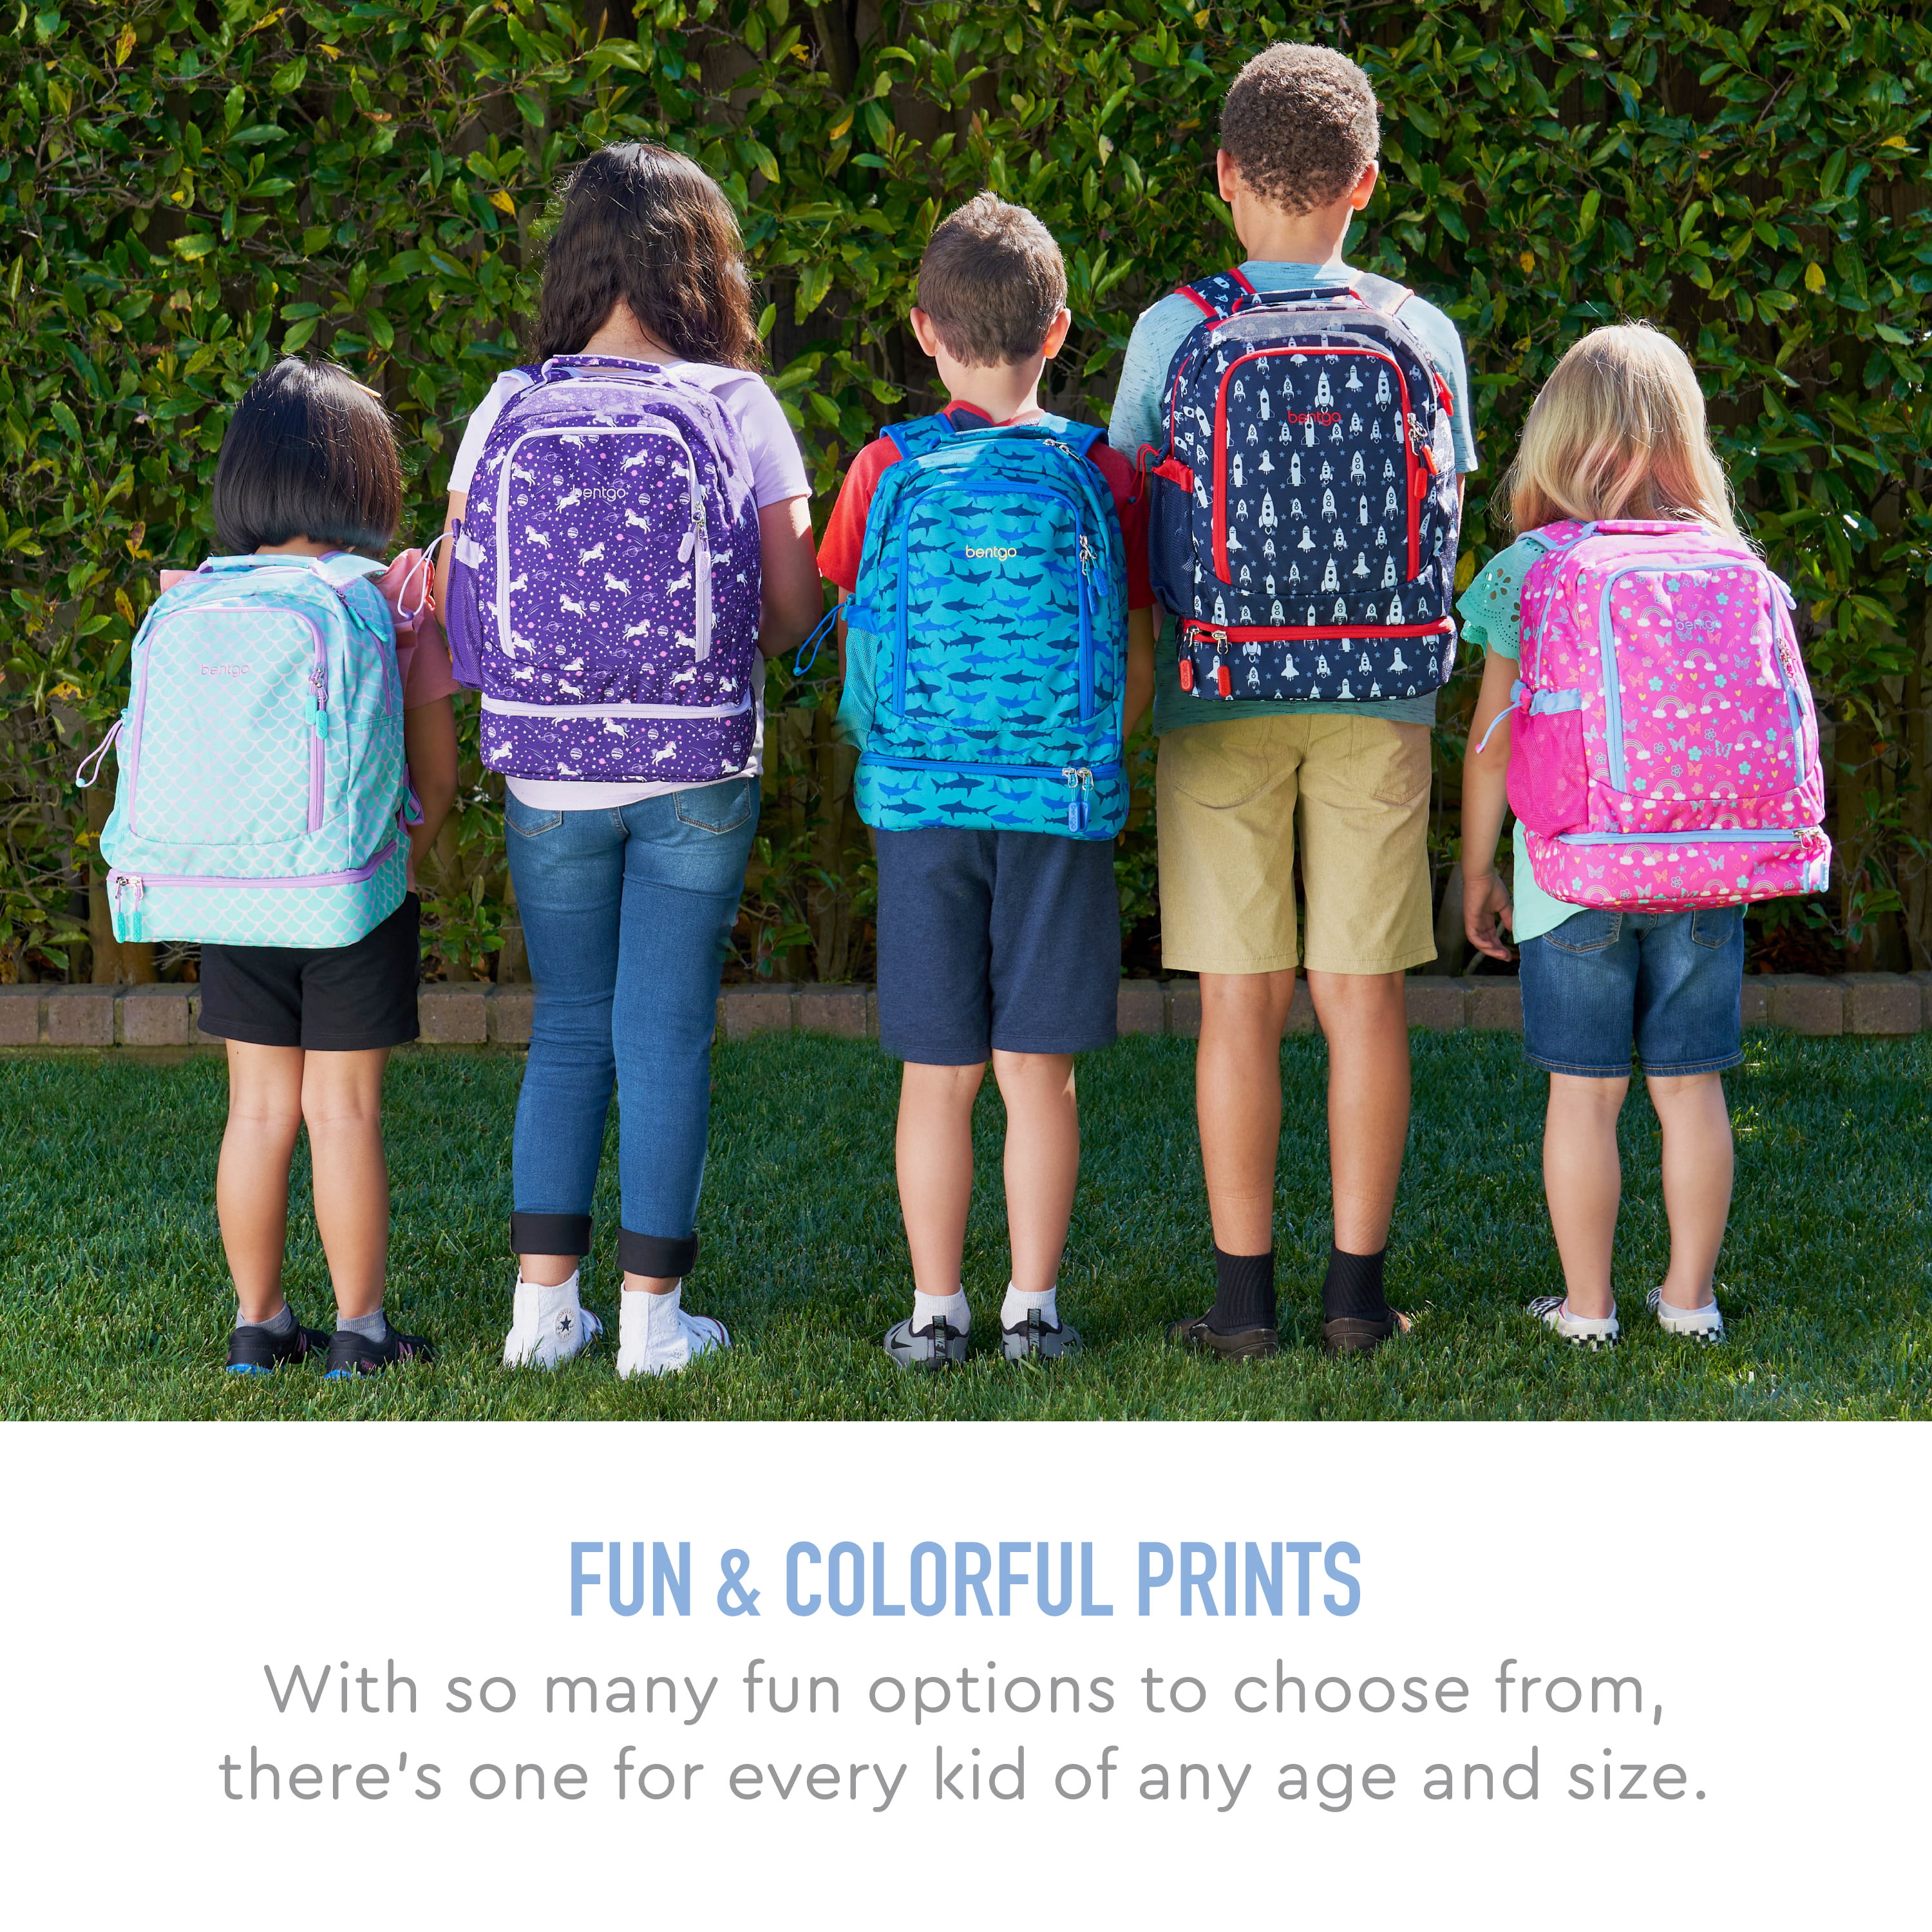 Bentgo® Kids 14” Backpack Set With Kids Prints Lunch Box (Dinosaur)